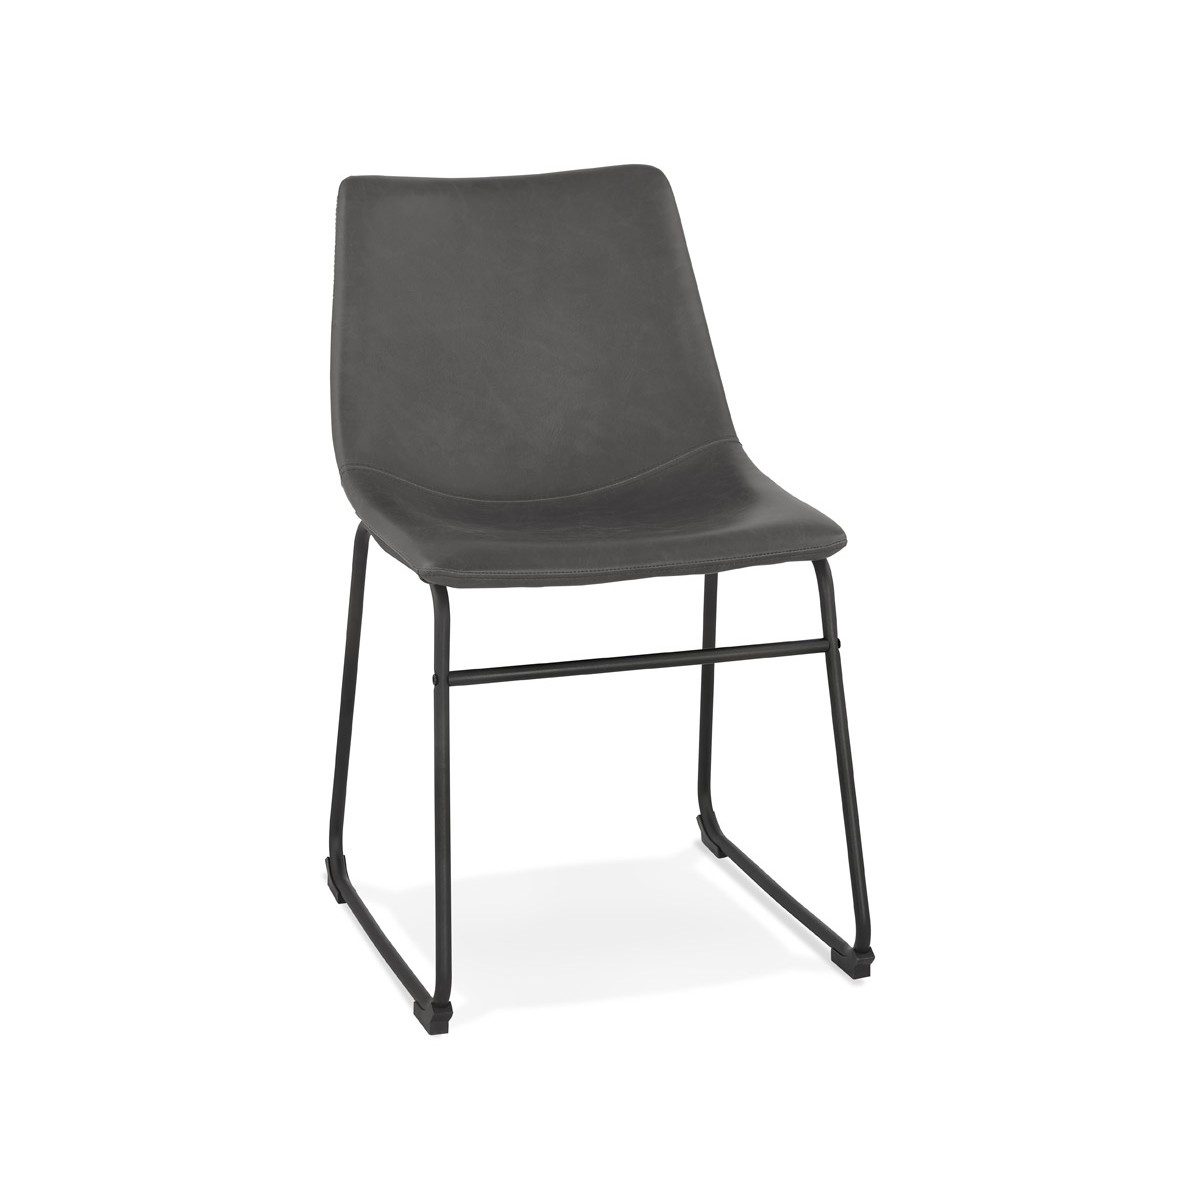 Vintage Stuhl und industrielle JOE schwarze Metallfüße - 6867 AMP Story (dunkelgrau)